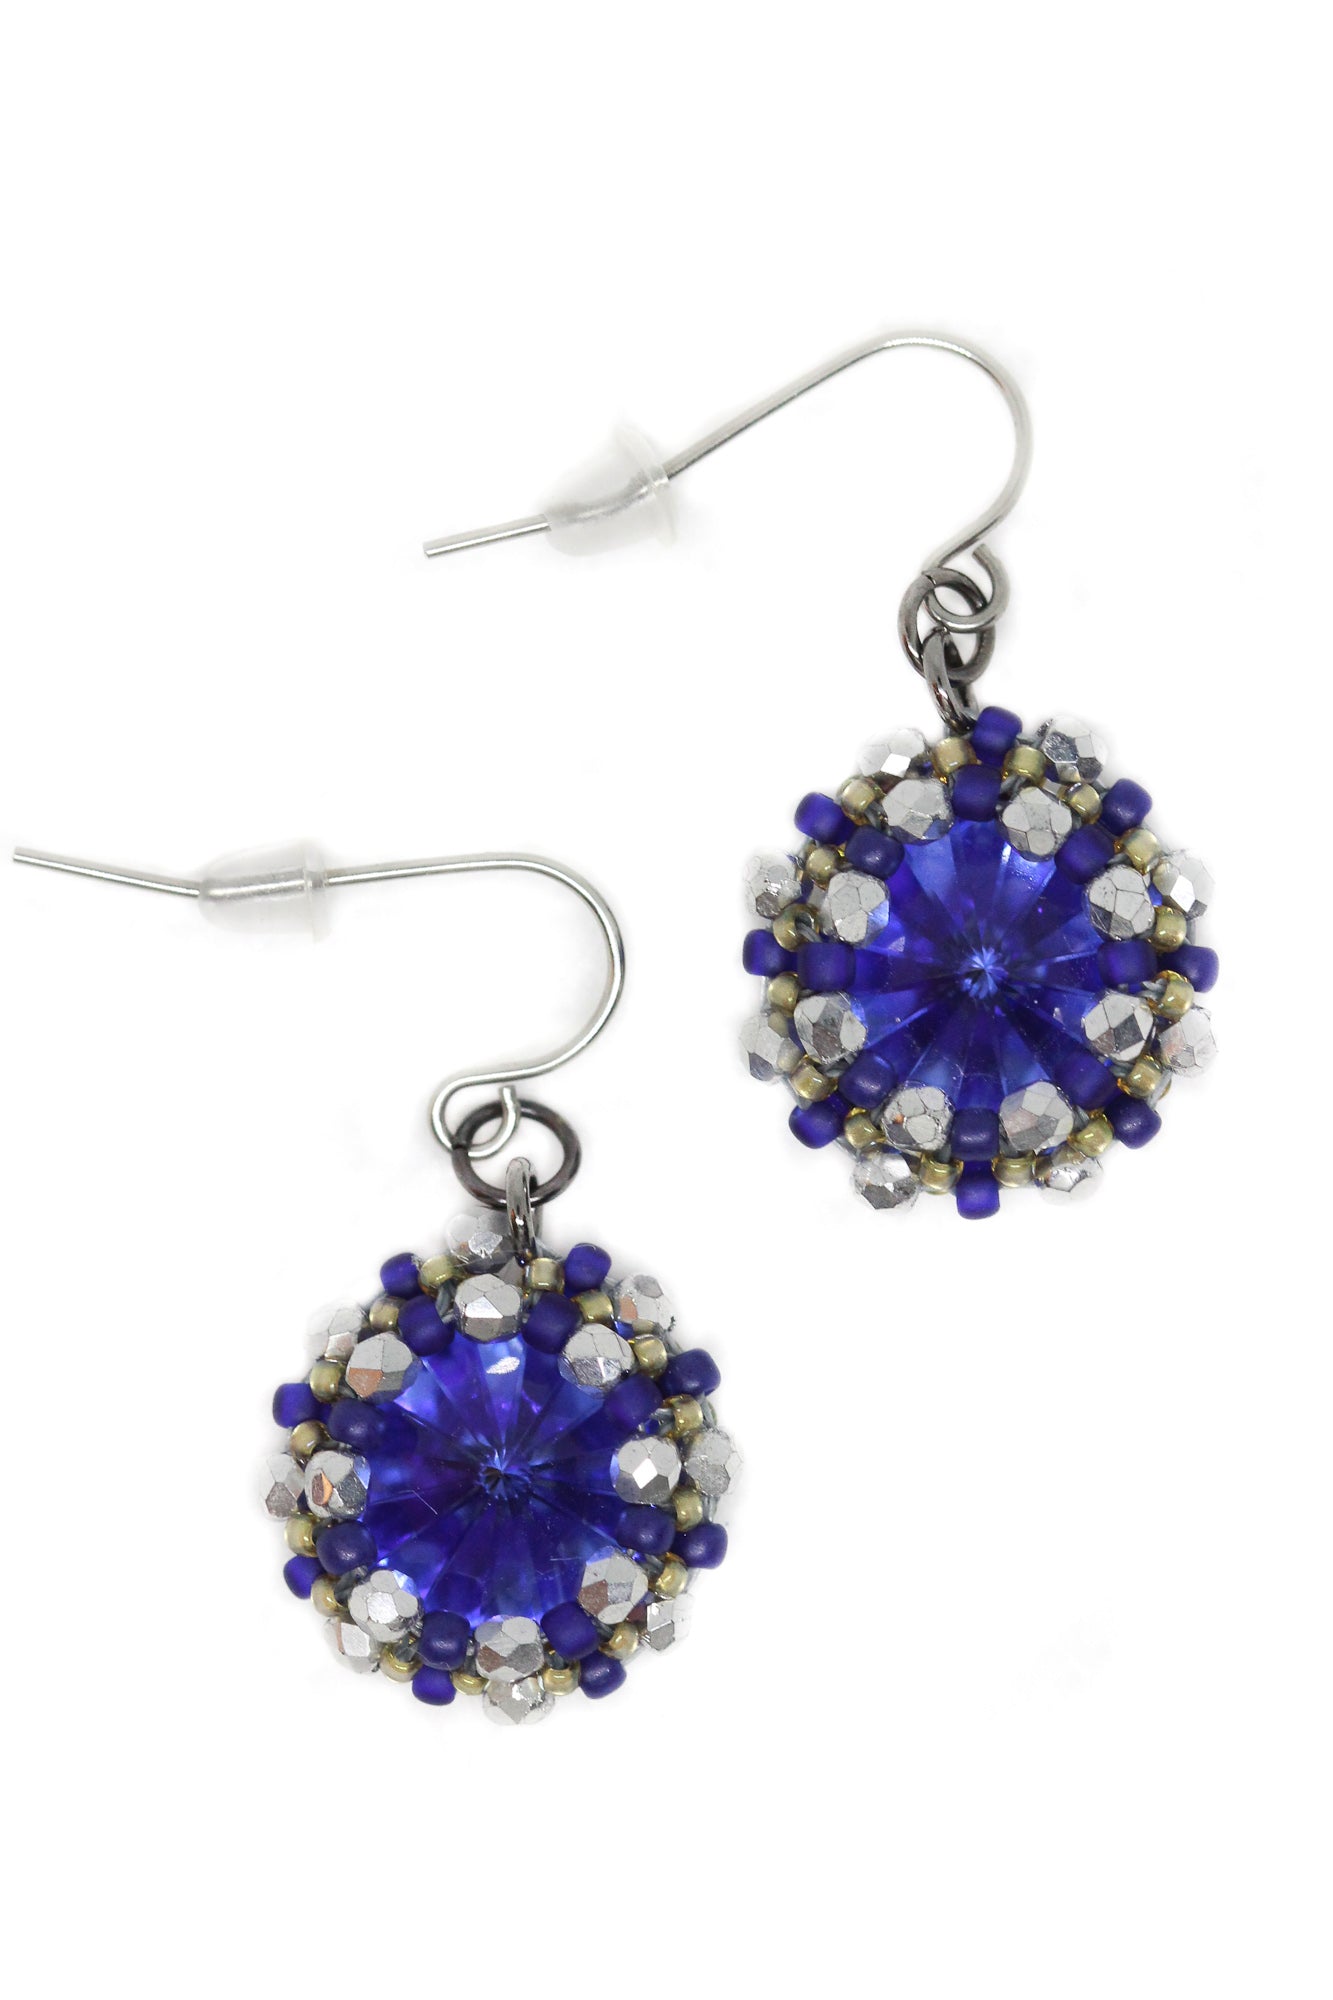 blue-crystal-drop-earrings-handmade-statement-earrings-blue-swarovski-crystal-earrings